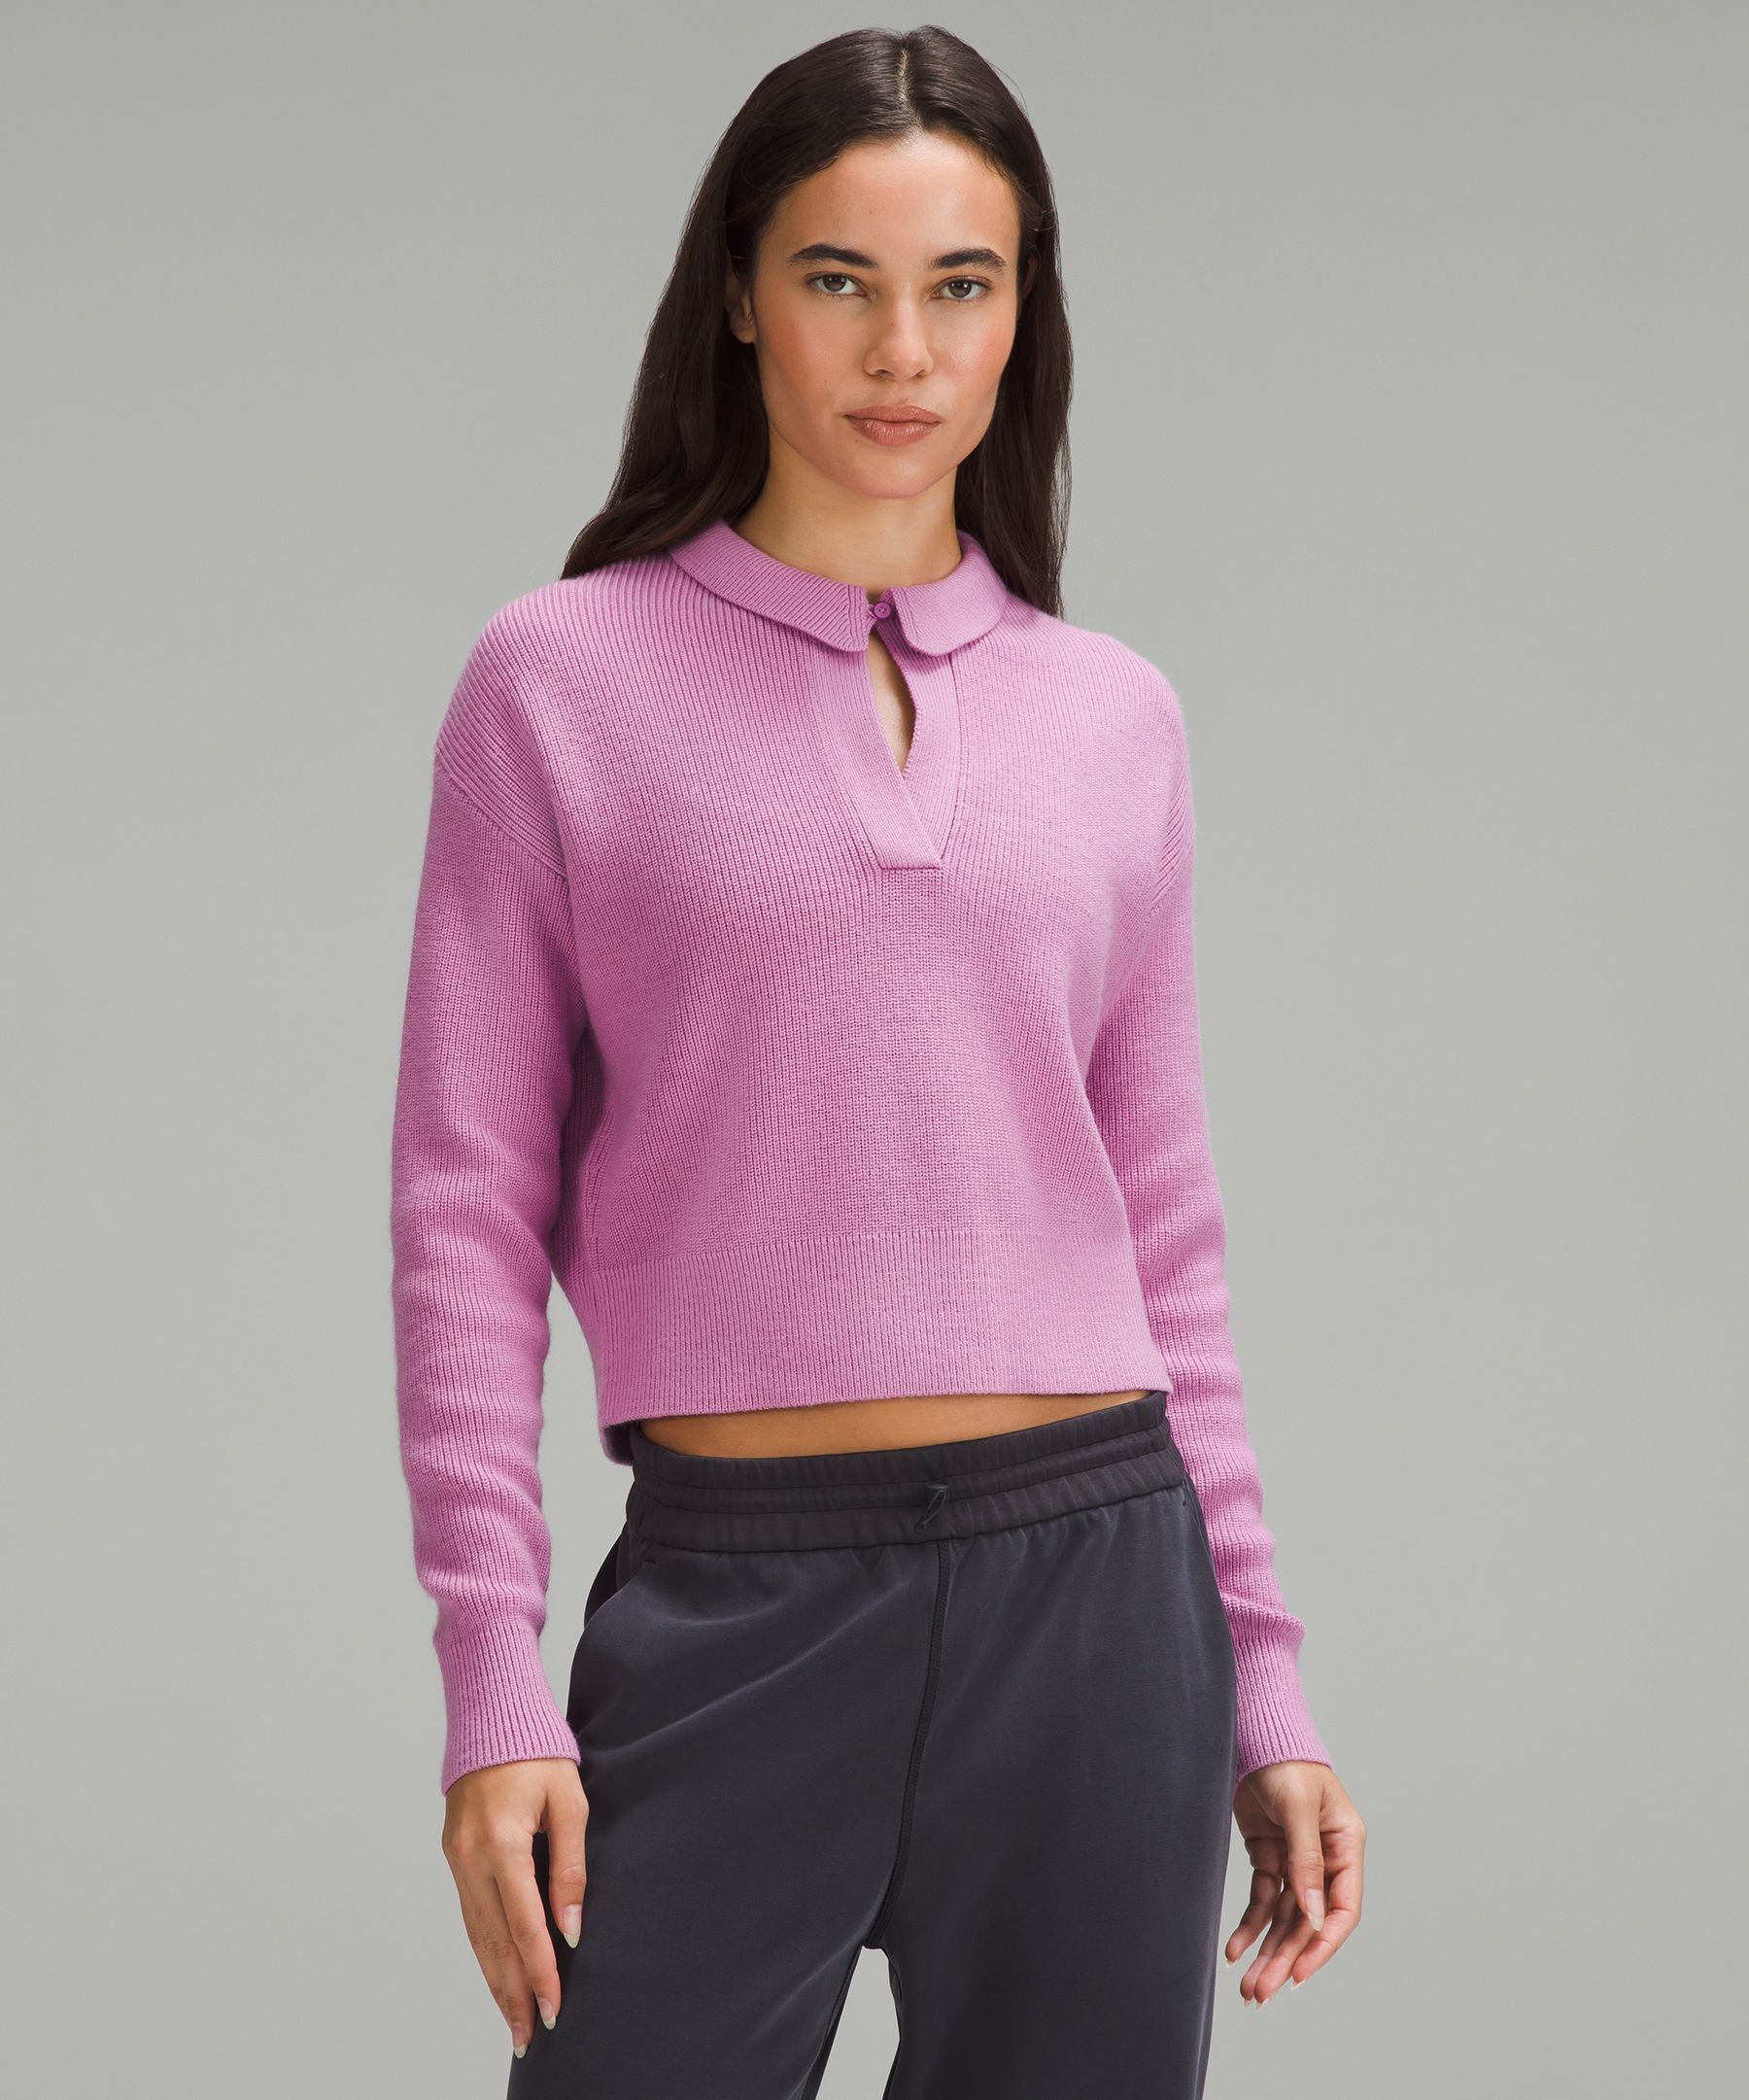 Lululemon Pink Sweatshirt Size 4 - $42 (55% Off Retail) - From Kack